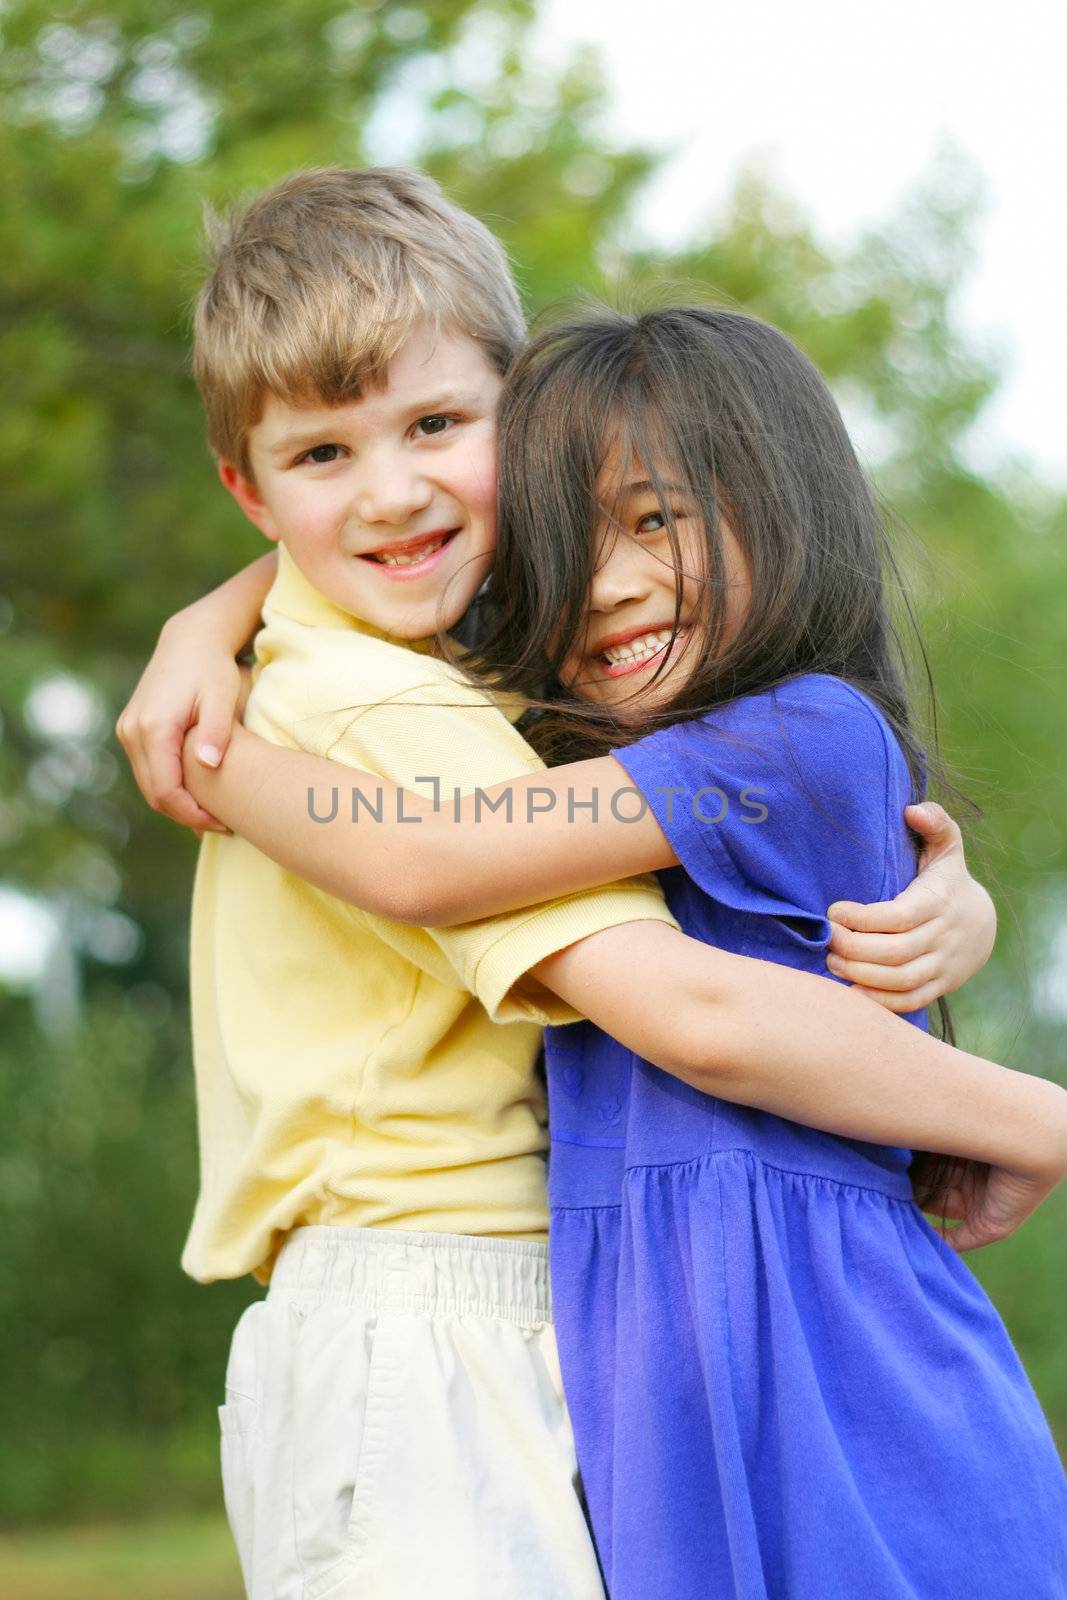 Best friends hugging, multicultural friendships, diversity